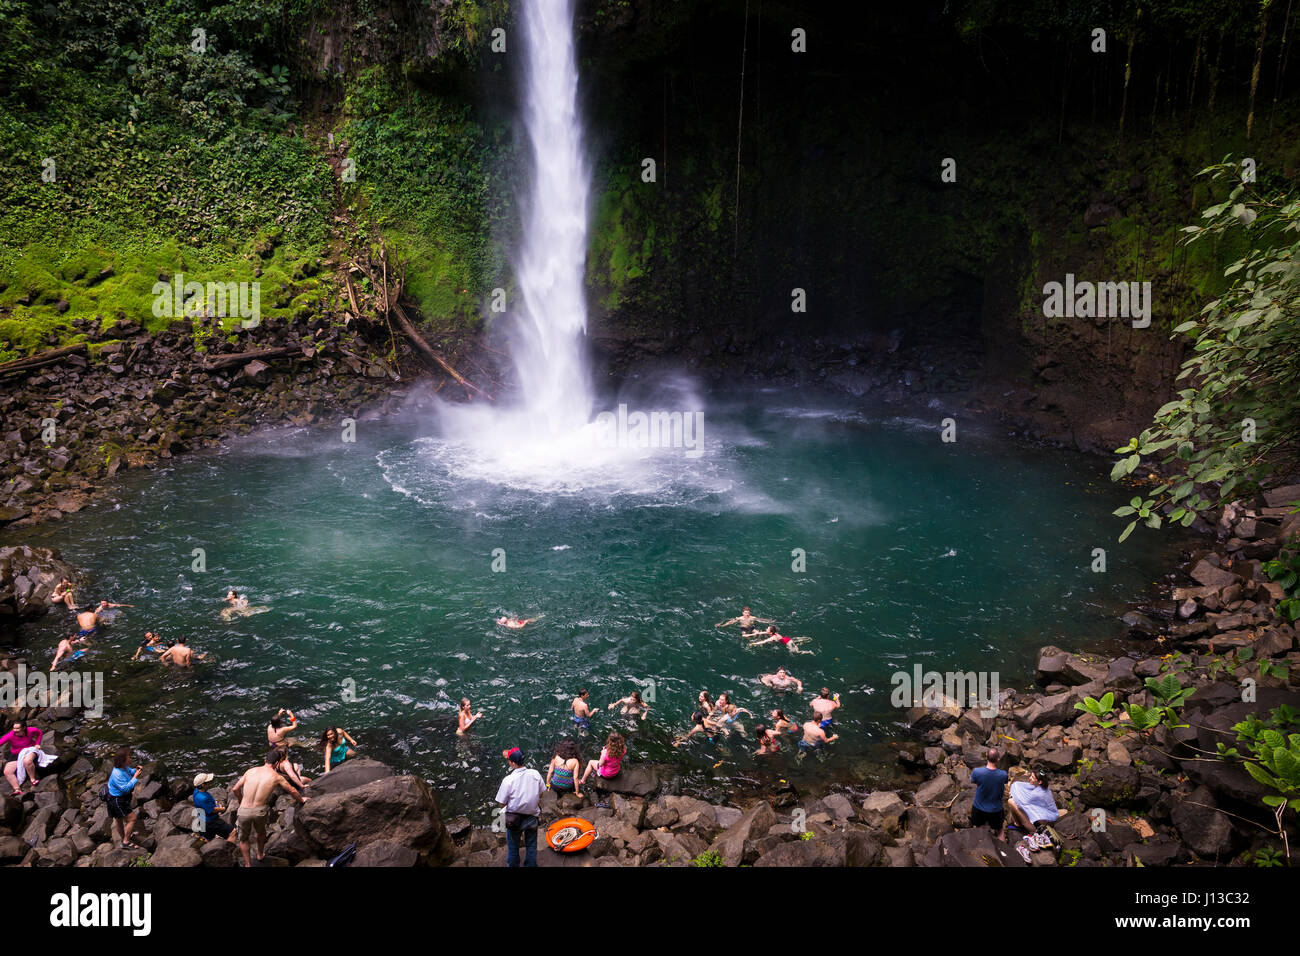 La Fortuna Waterfall, Costa Rica - March 31, 2014: People swimming at the pool of the La Fortuna Waterfall in Costa Rica. Stock Photo